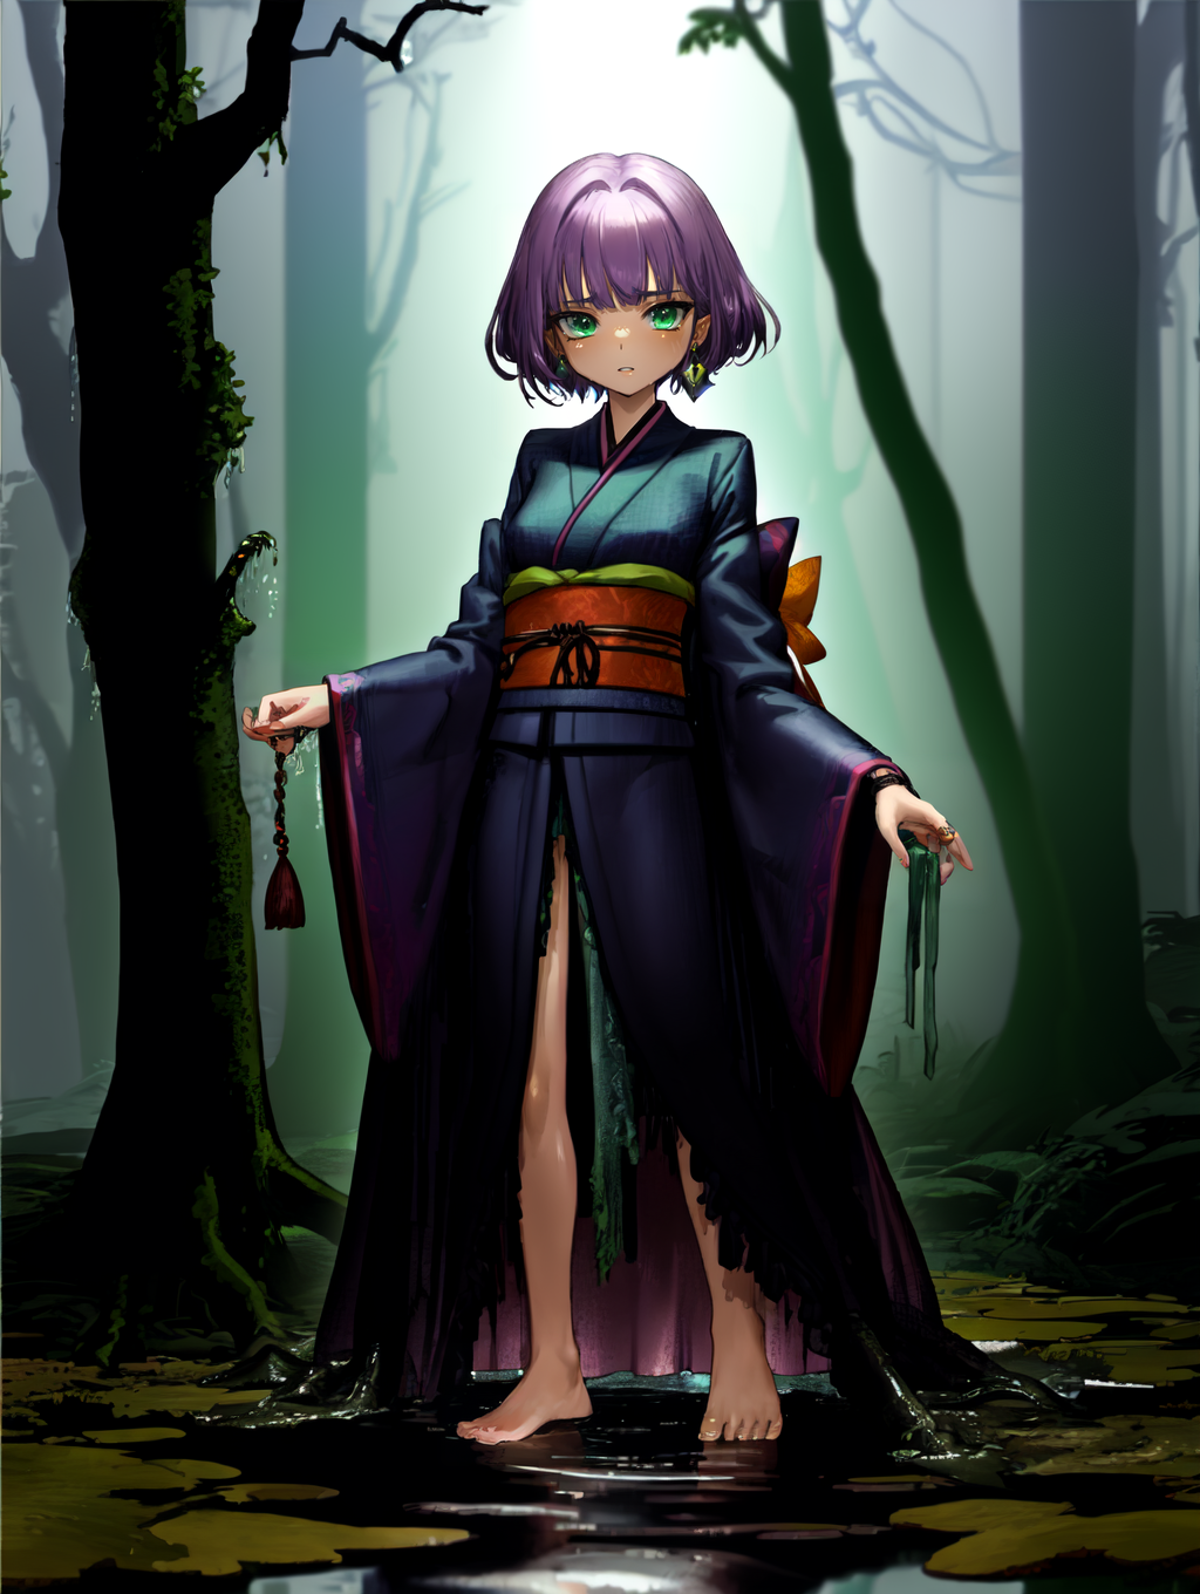 Masamune Shirow Style image by Mooshieblob